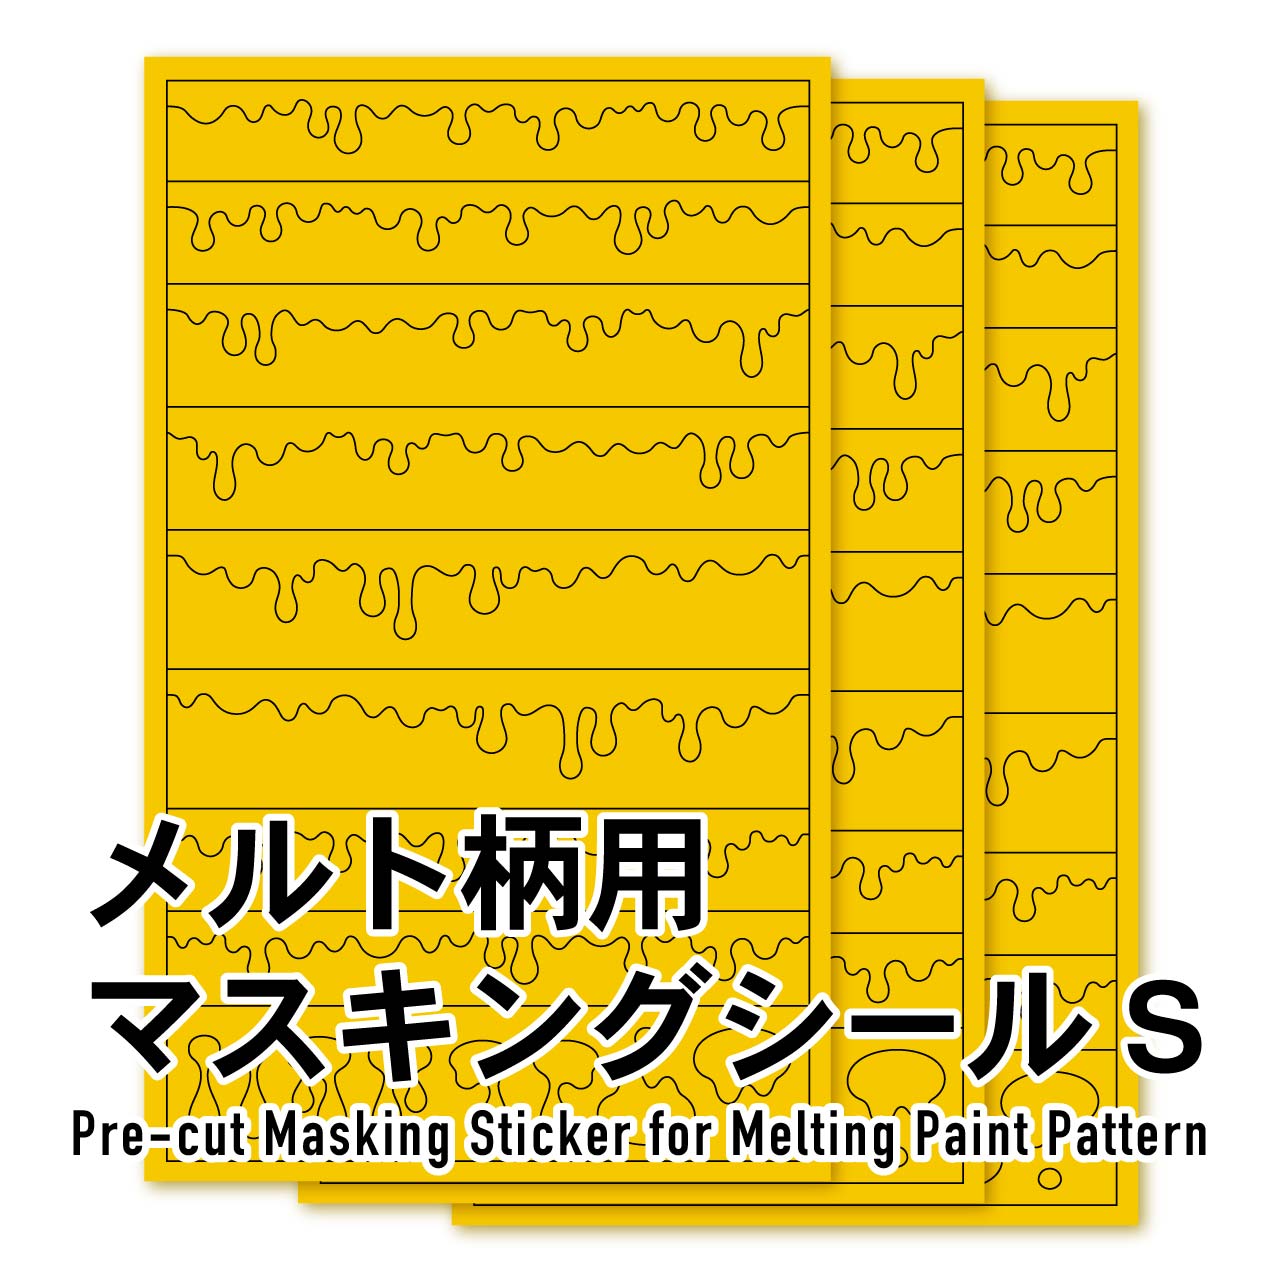 HiQ Parts Pre-cut Masking for Melt Paint Pattern (3pcs)